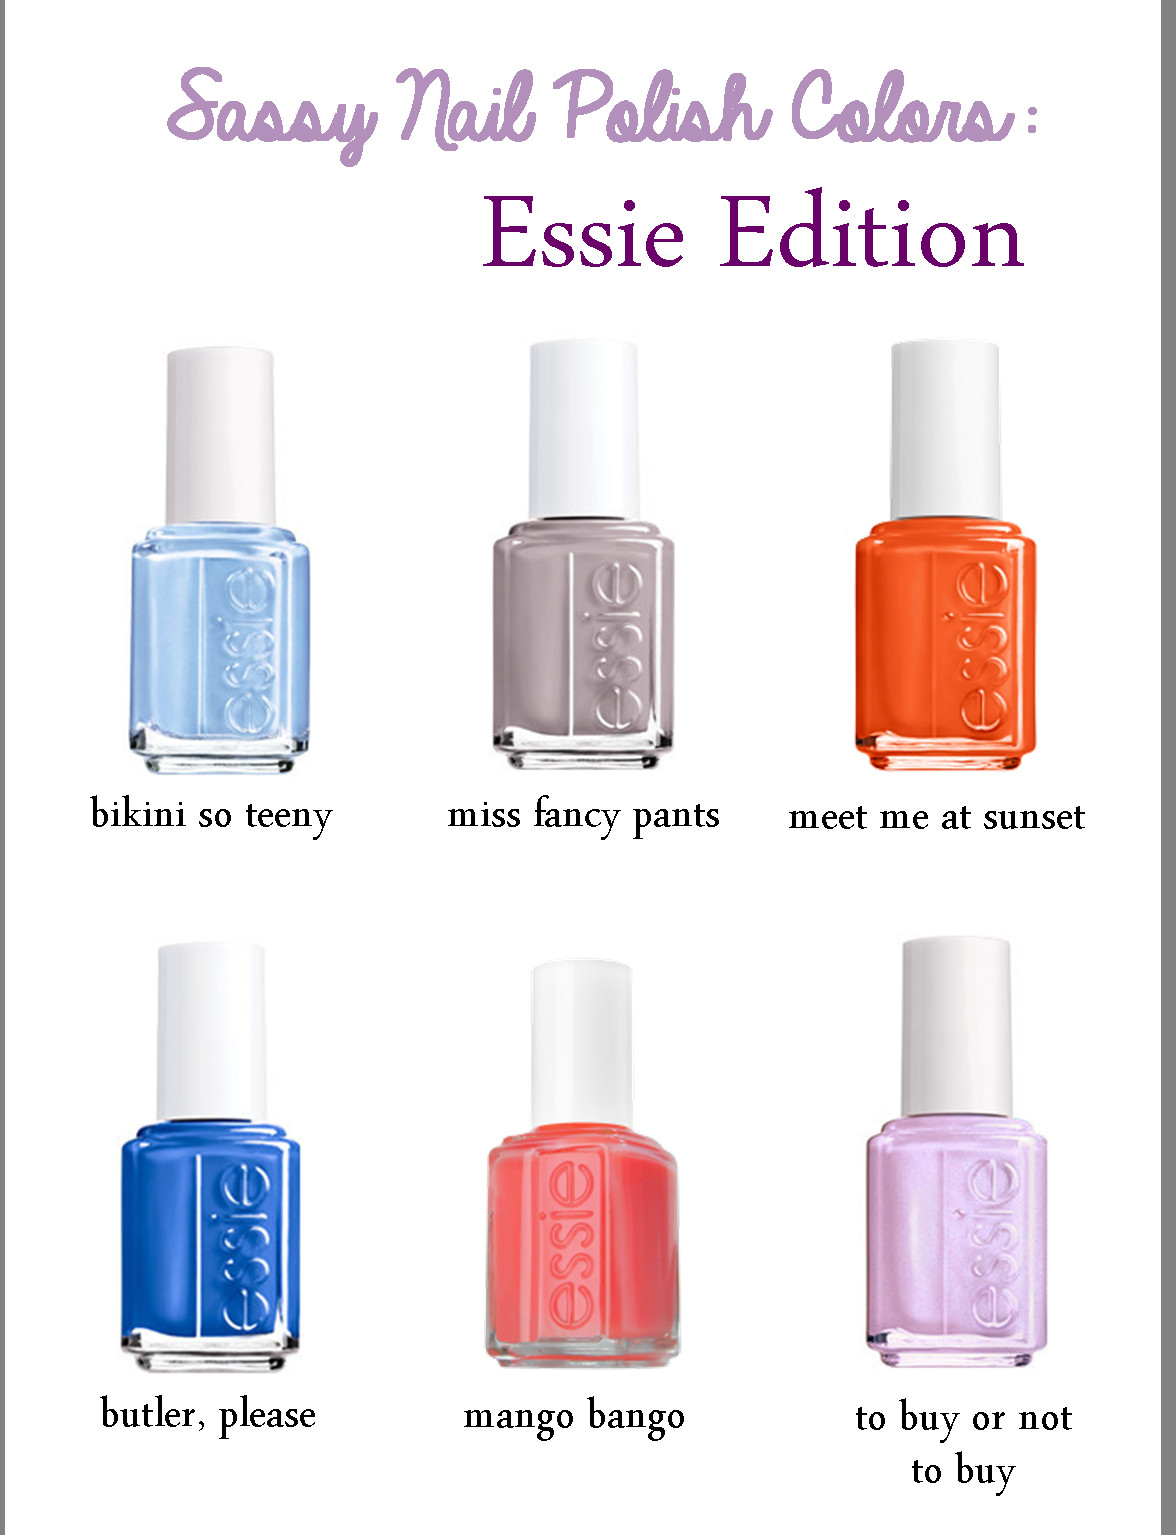 Essie Nail Colors
 Sassy Nail Polish Colors Essie Edition